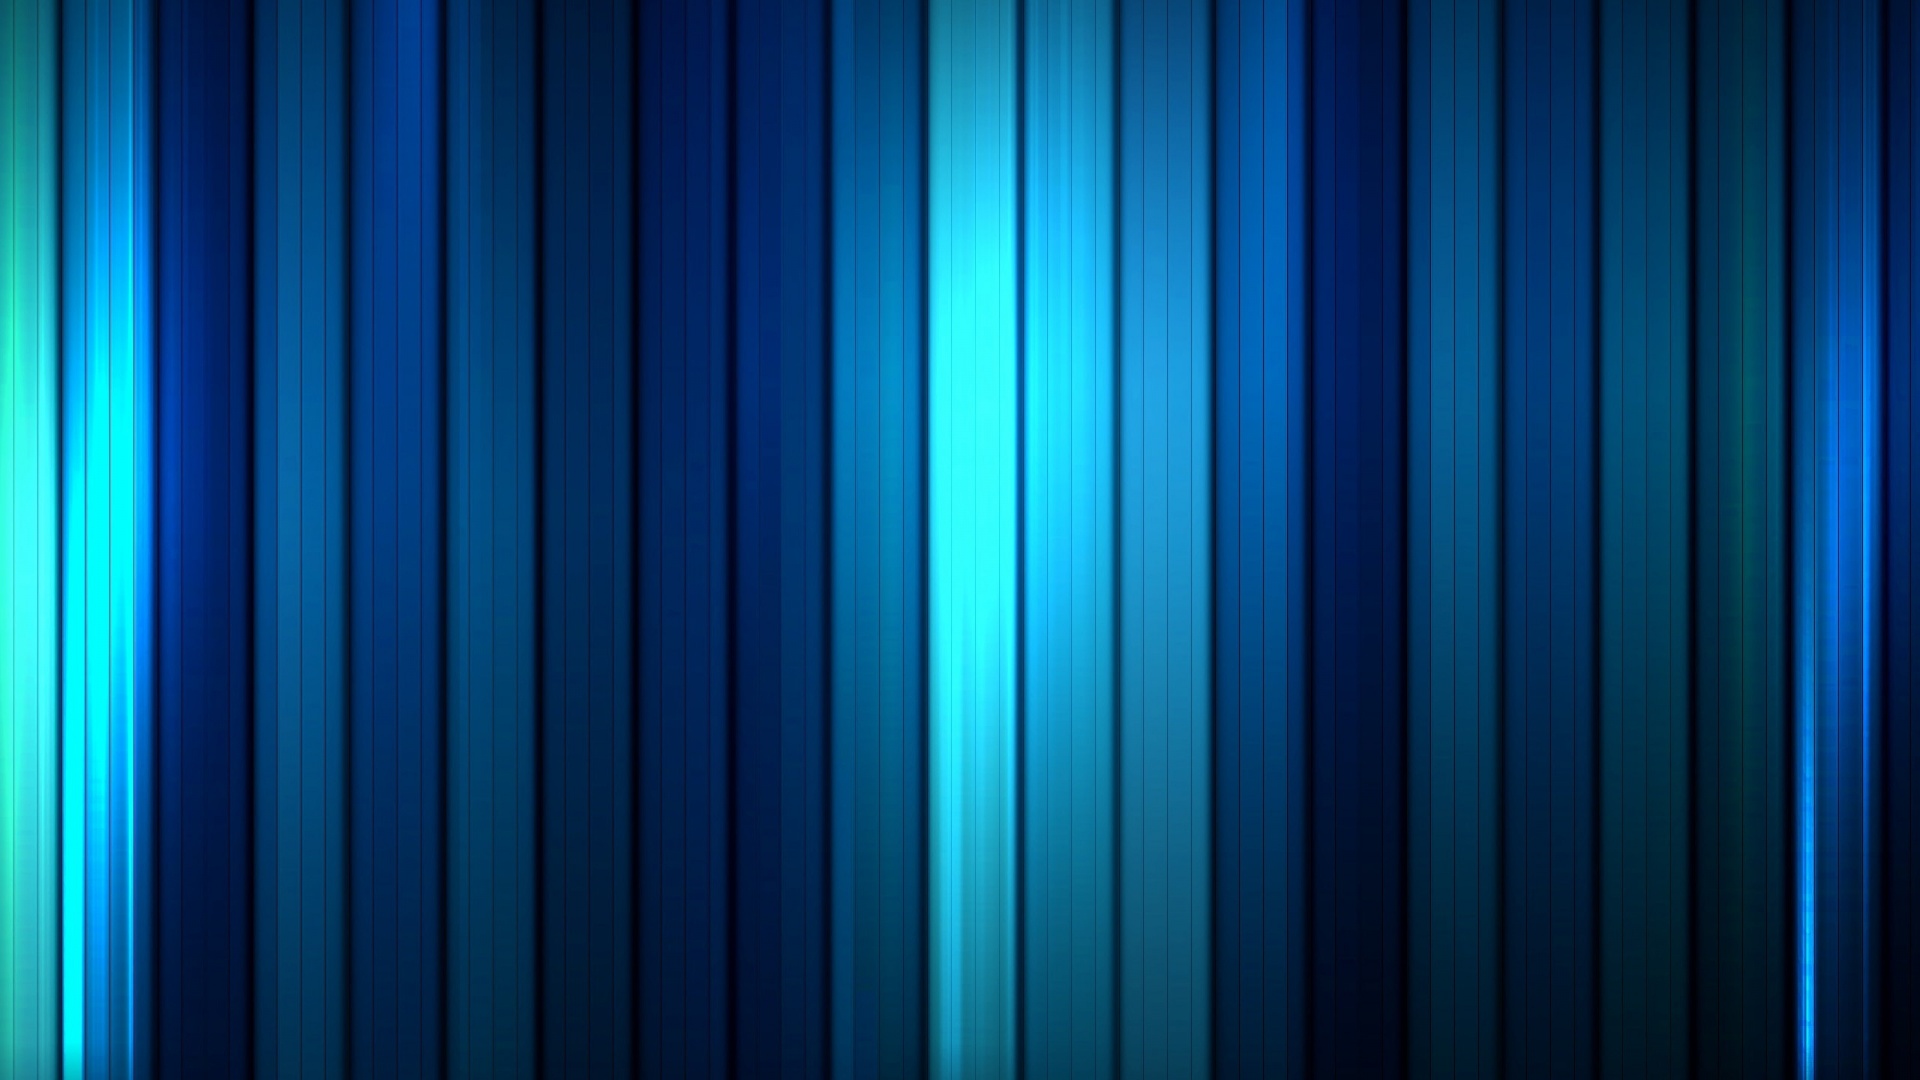 1920x1080 Vertical blue stripes desktop PC and Mac wallpaper